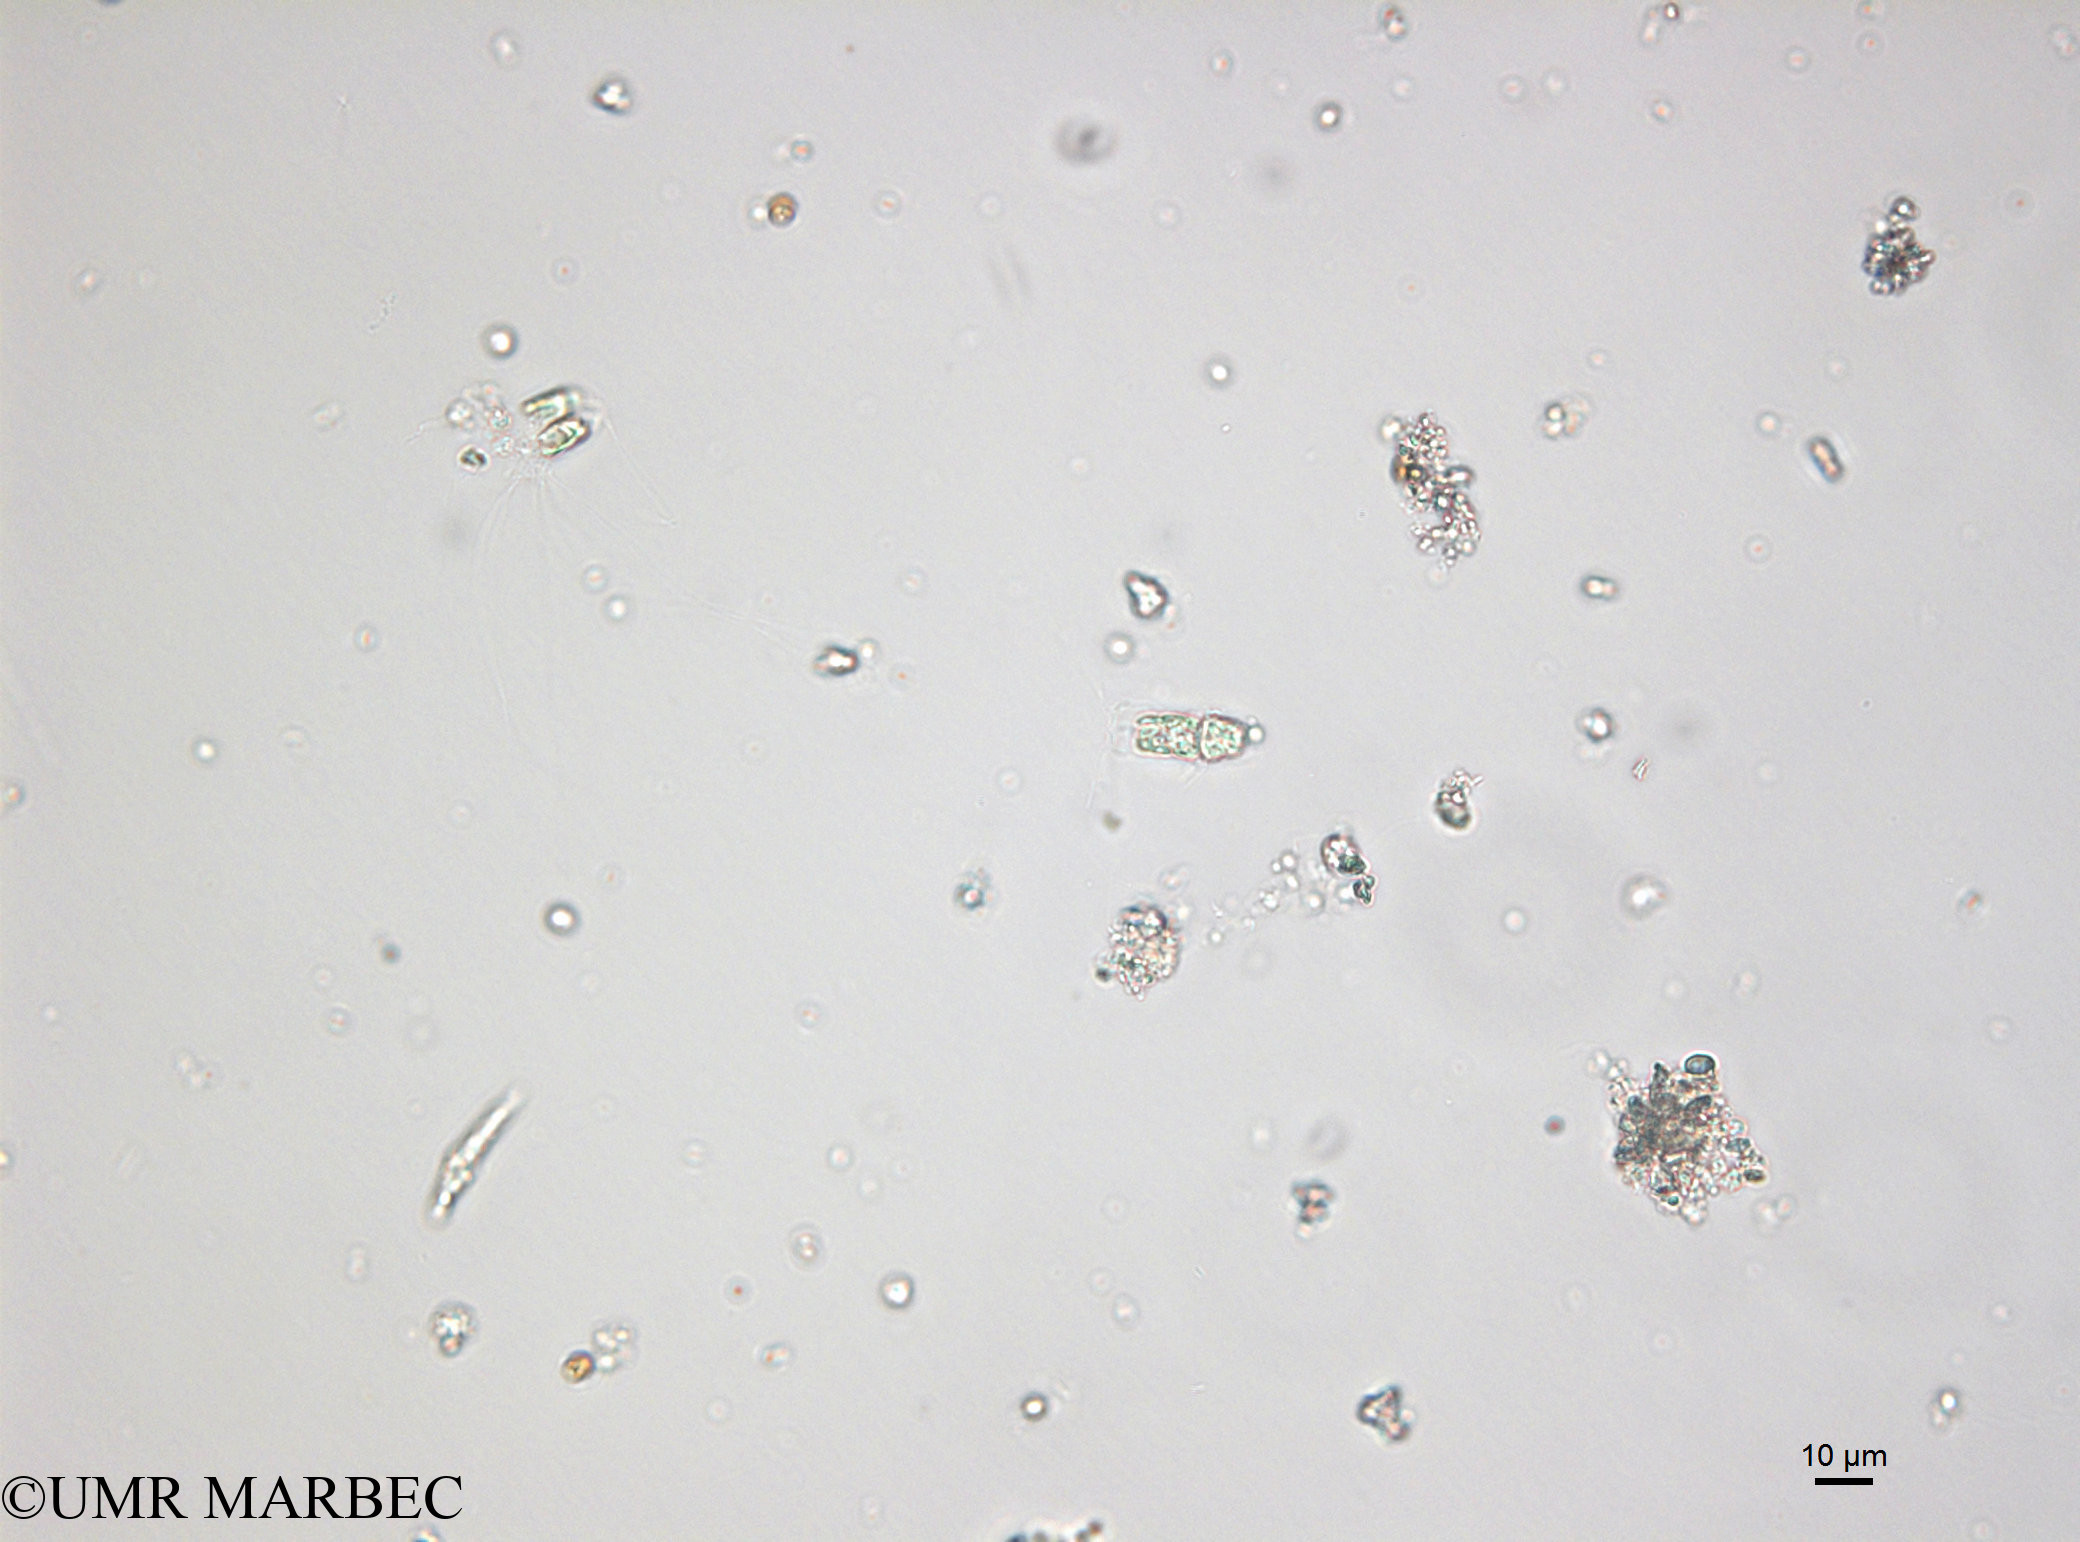 phyto/Bizerte/bizerte_bay/RISCO April 2014/Bacteriastrum sp10 (ancien B. sp4 -150109_001_ovl-4)(copy).jpg